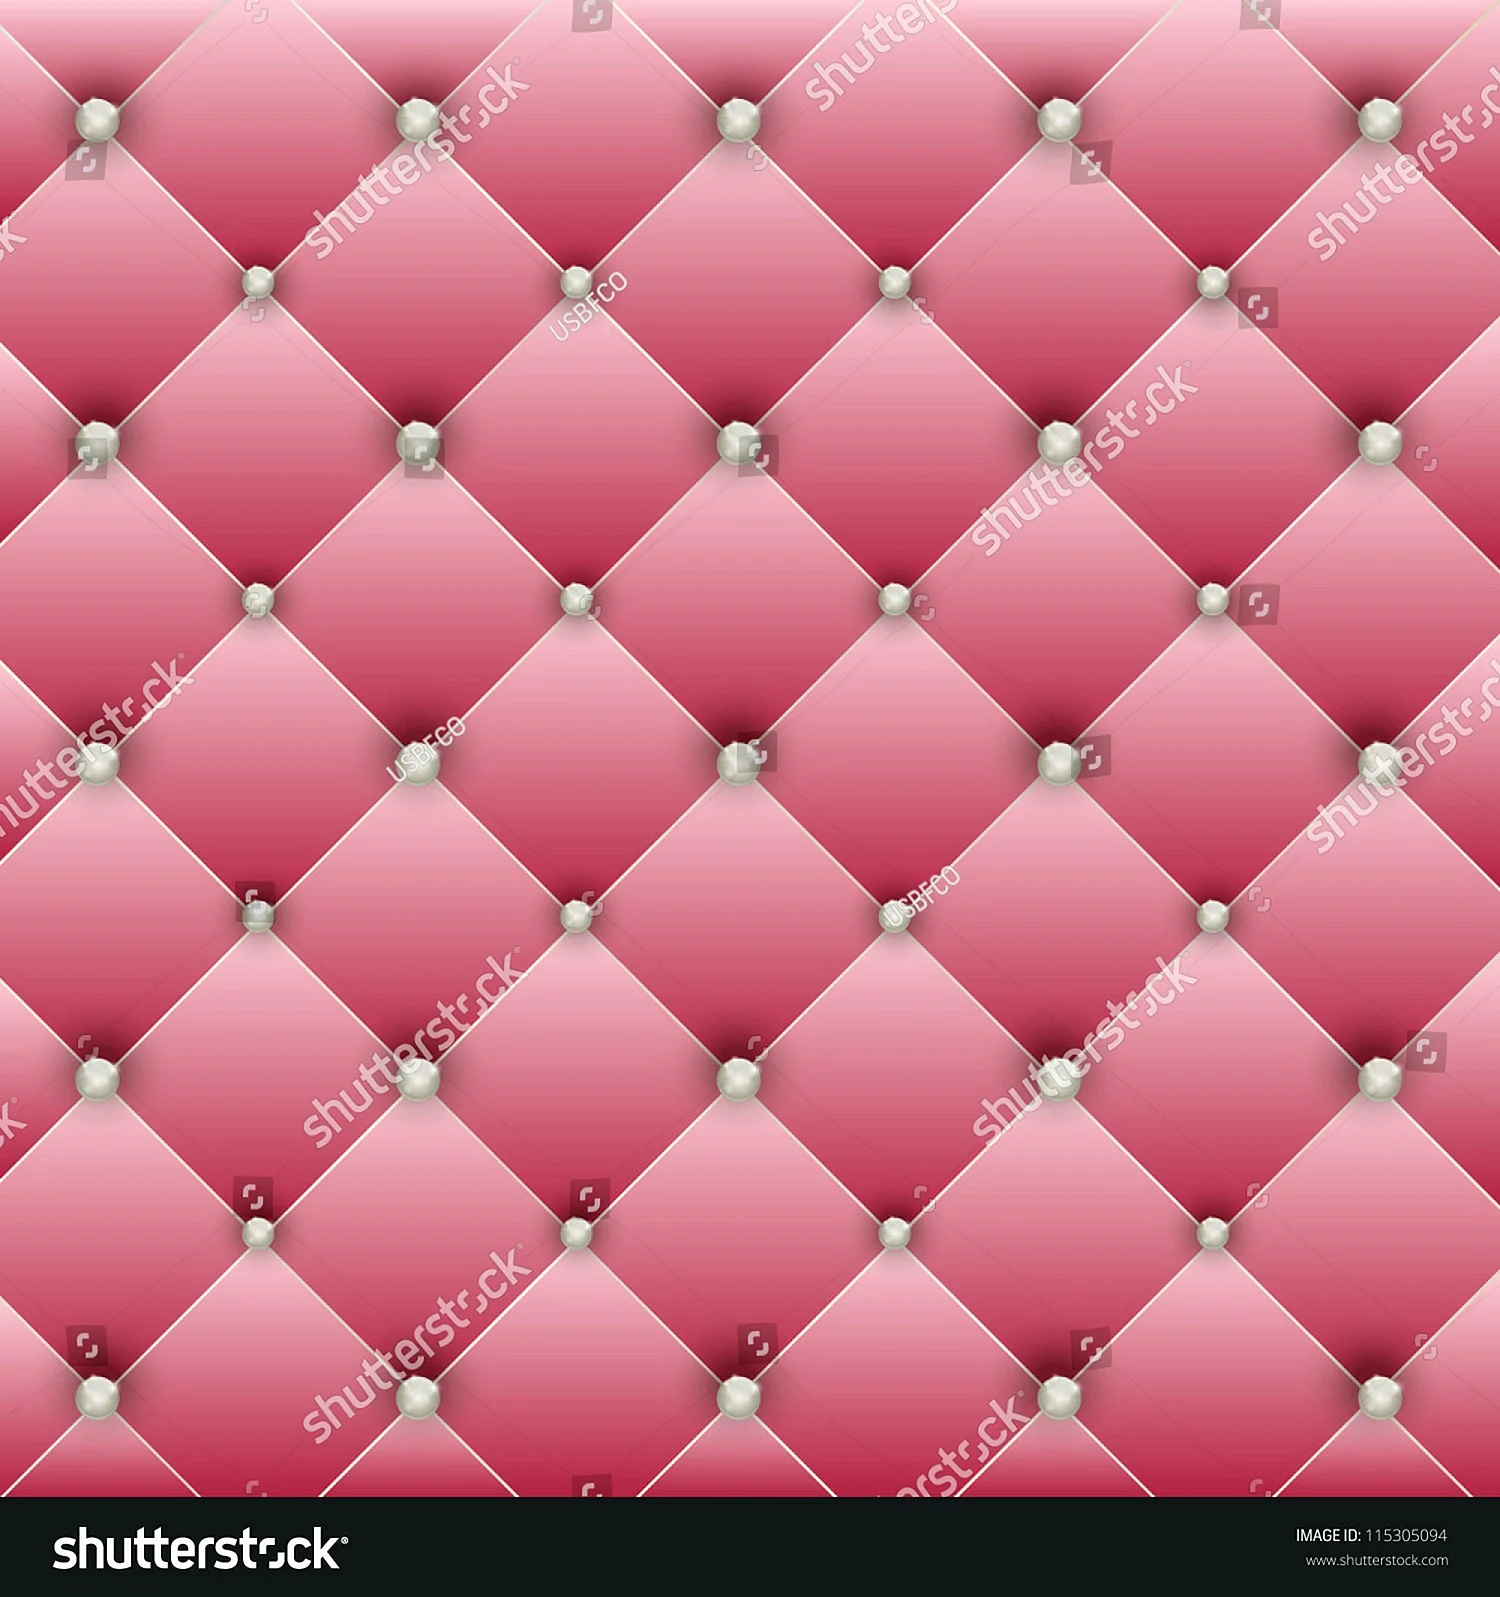 Каретная стяжка розовая